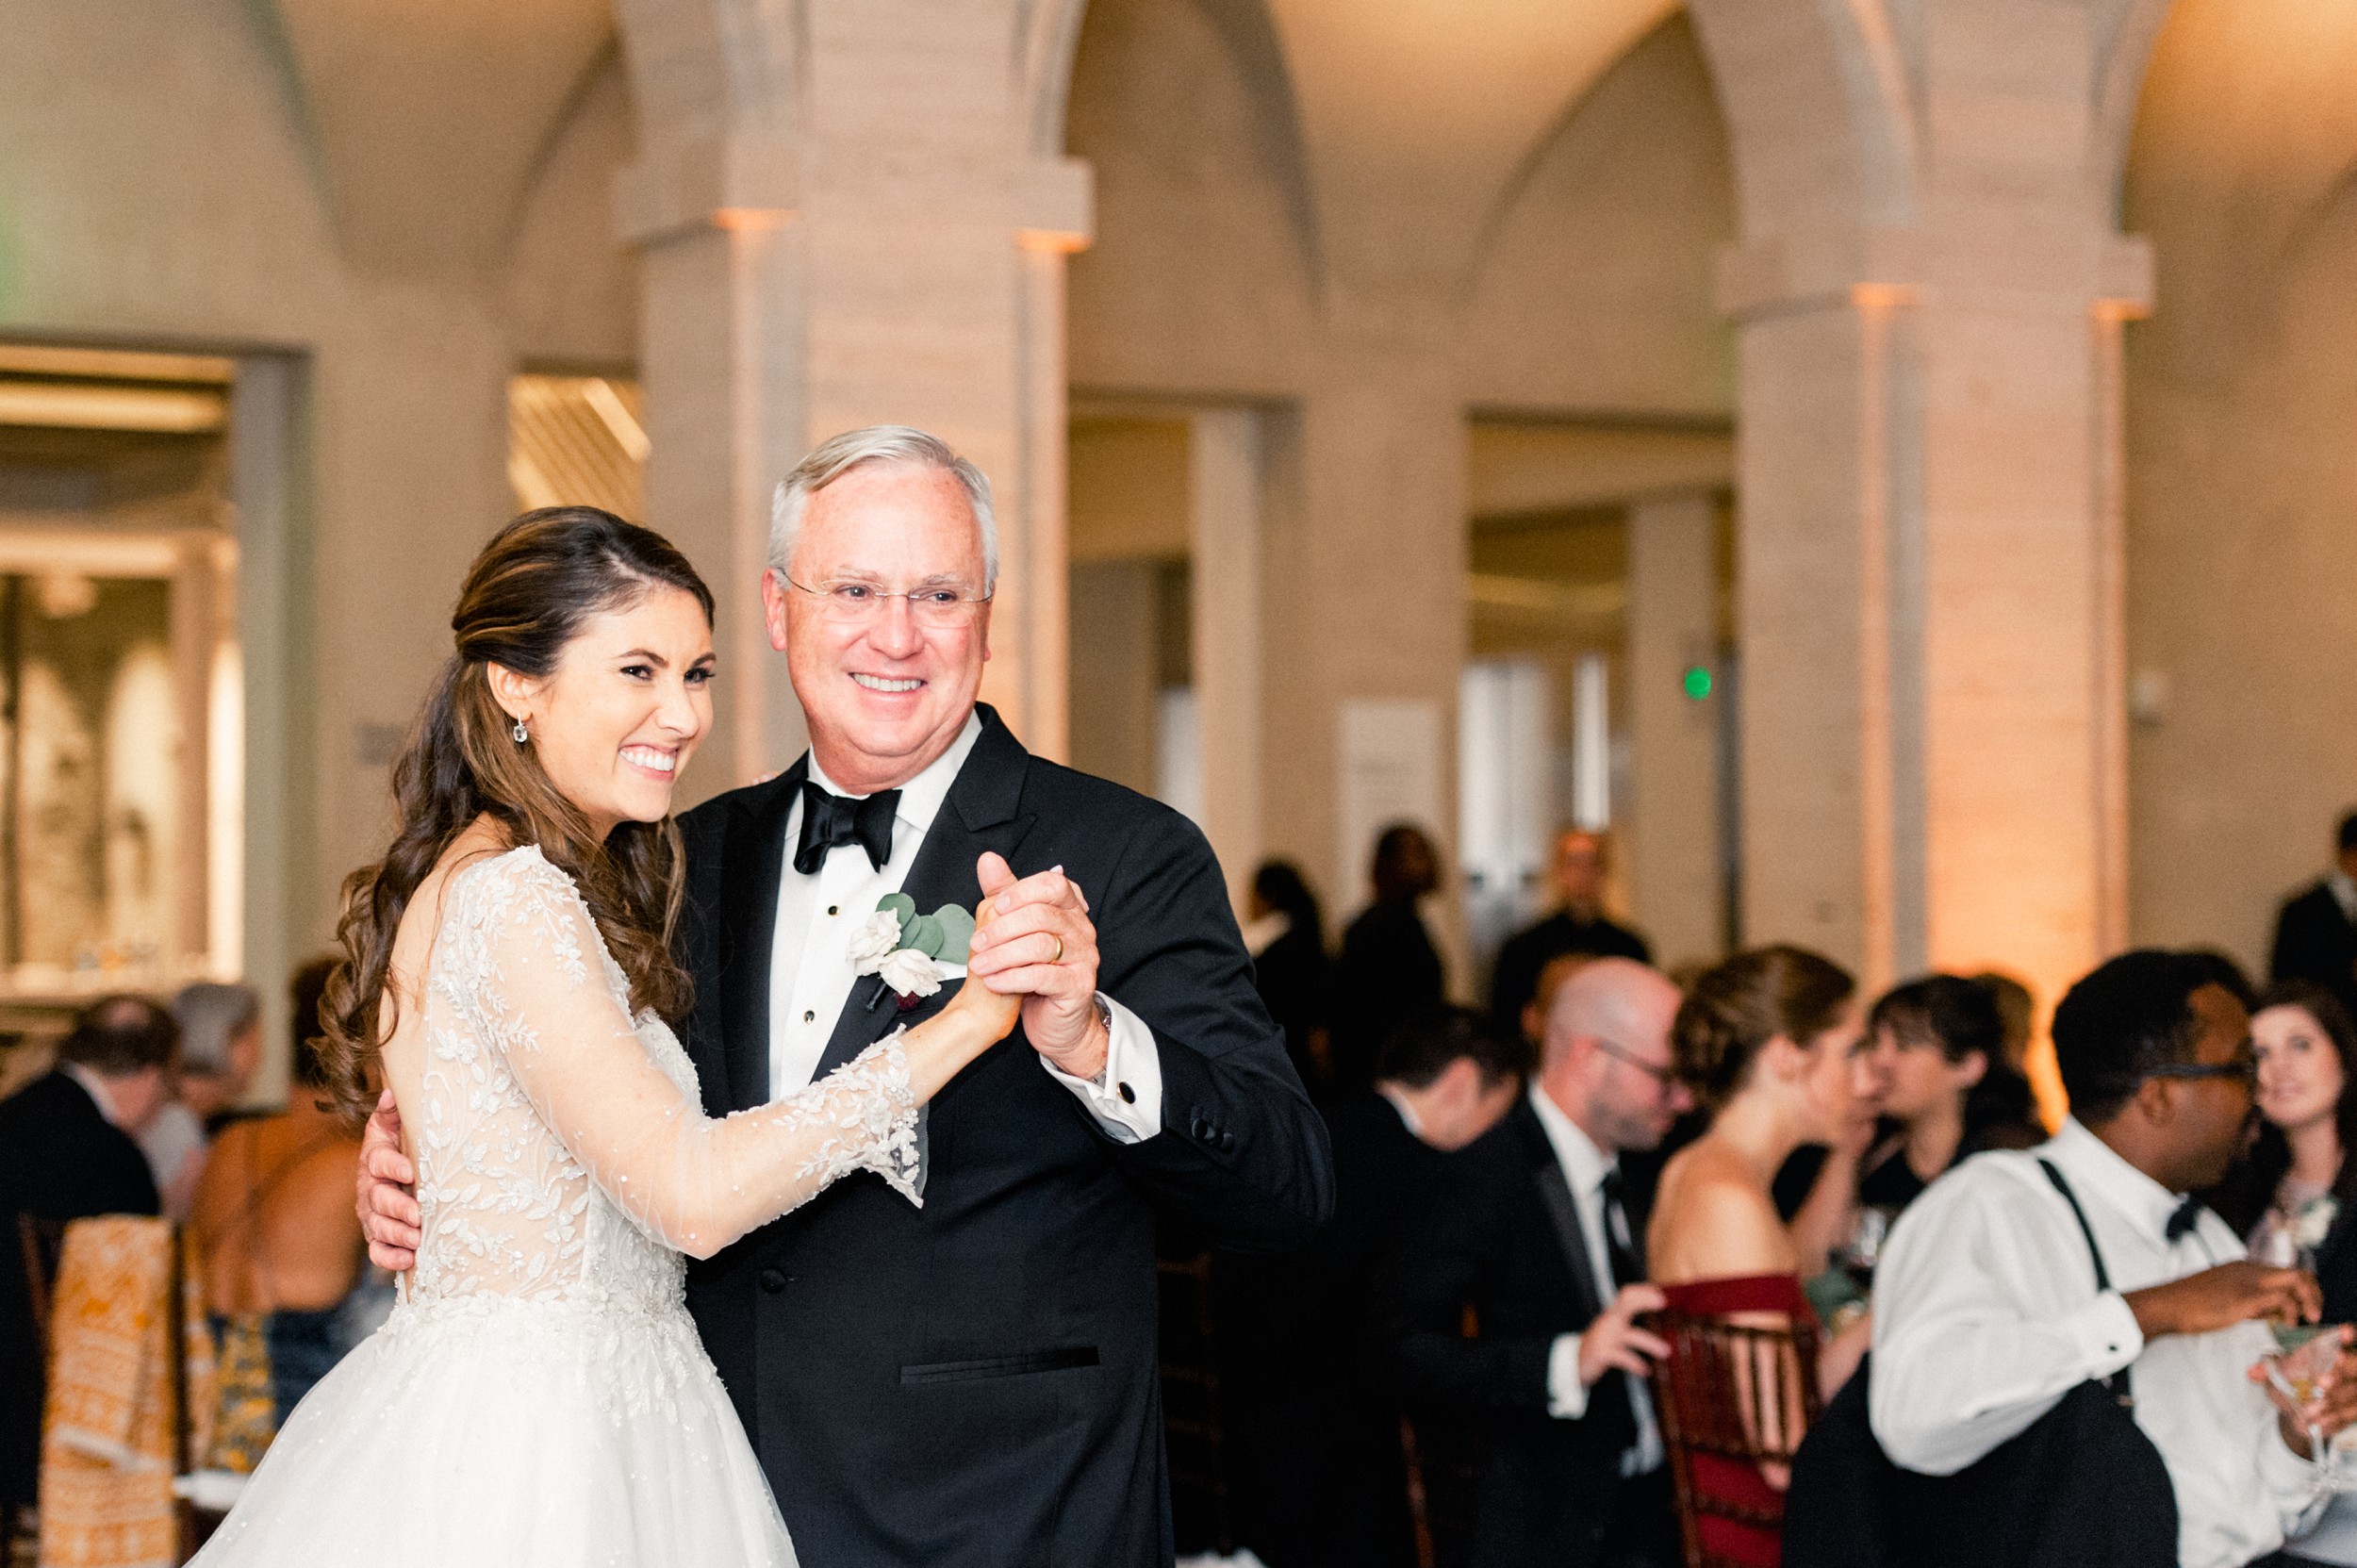 Harvard Art Museum Wedding Reception - parent dances